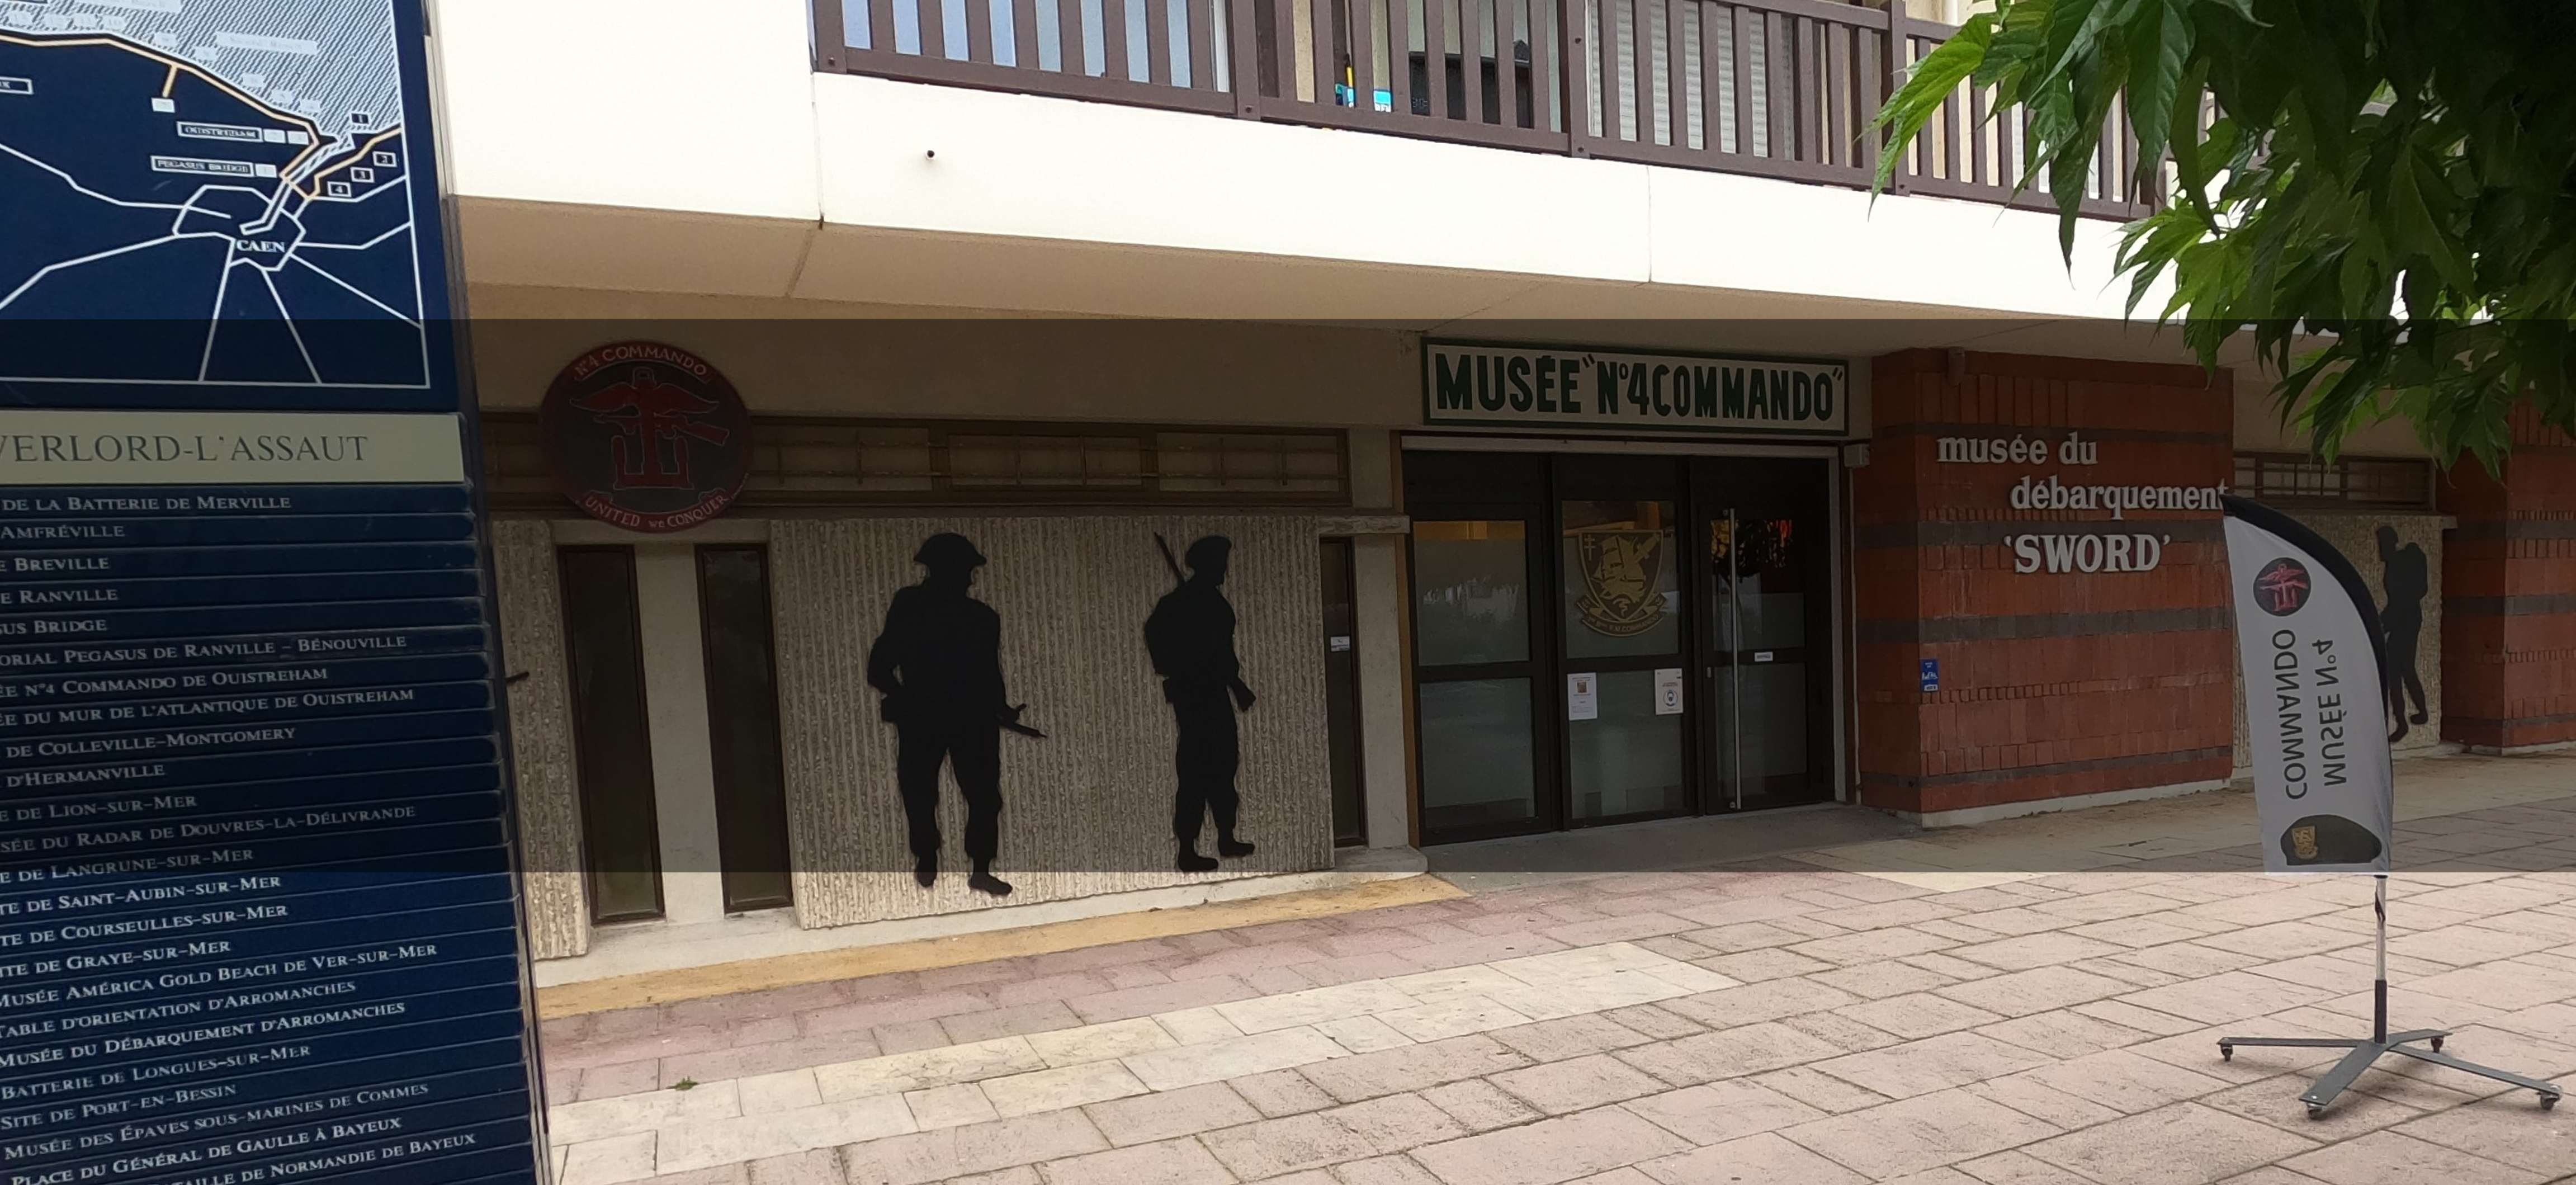 Musée n°4 Commando